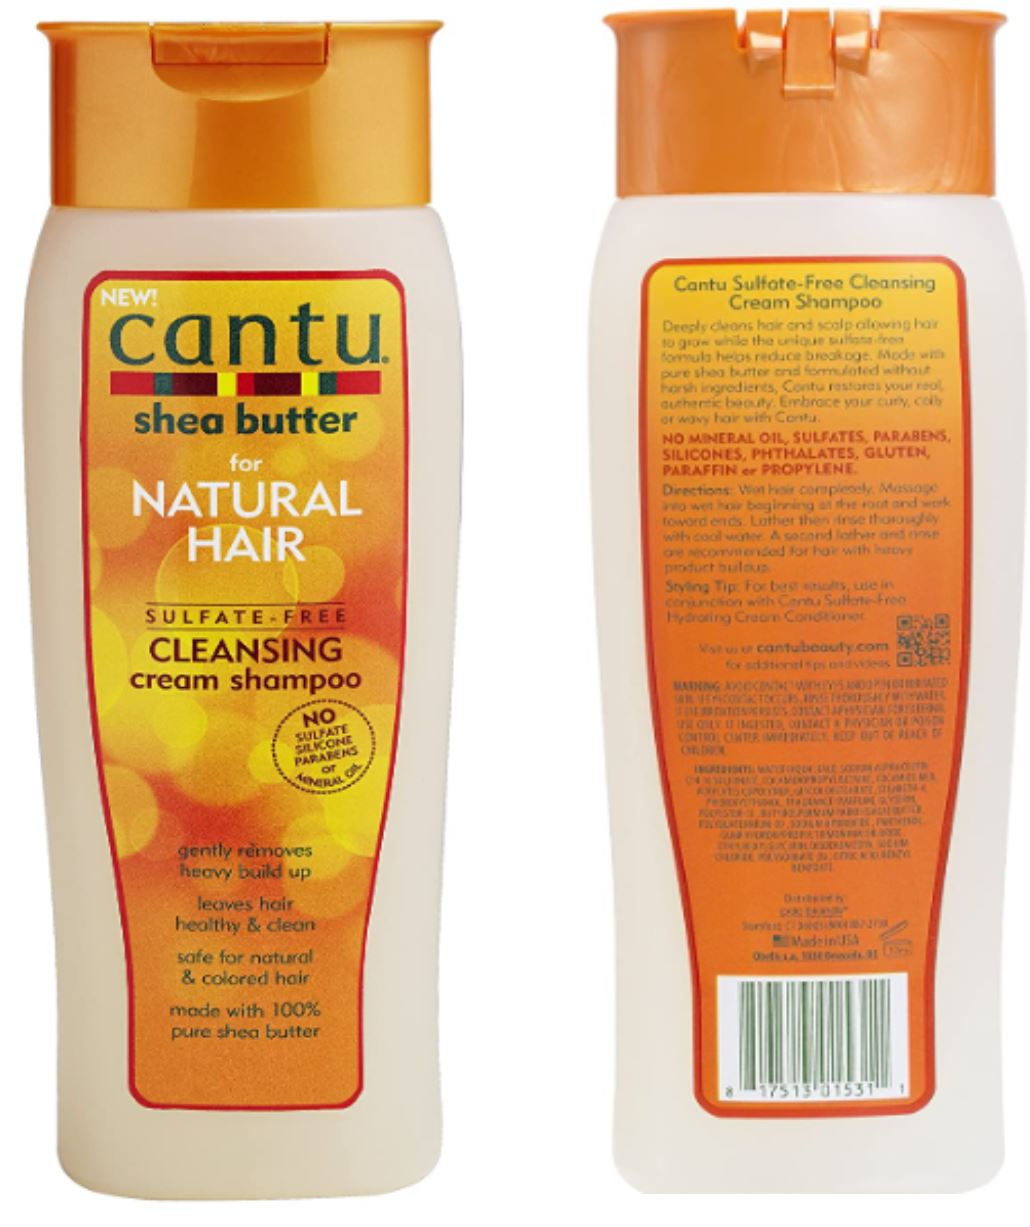 Cantu Sul-FR Cleans Crm Shampoo